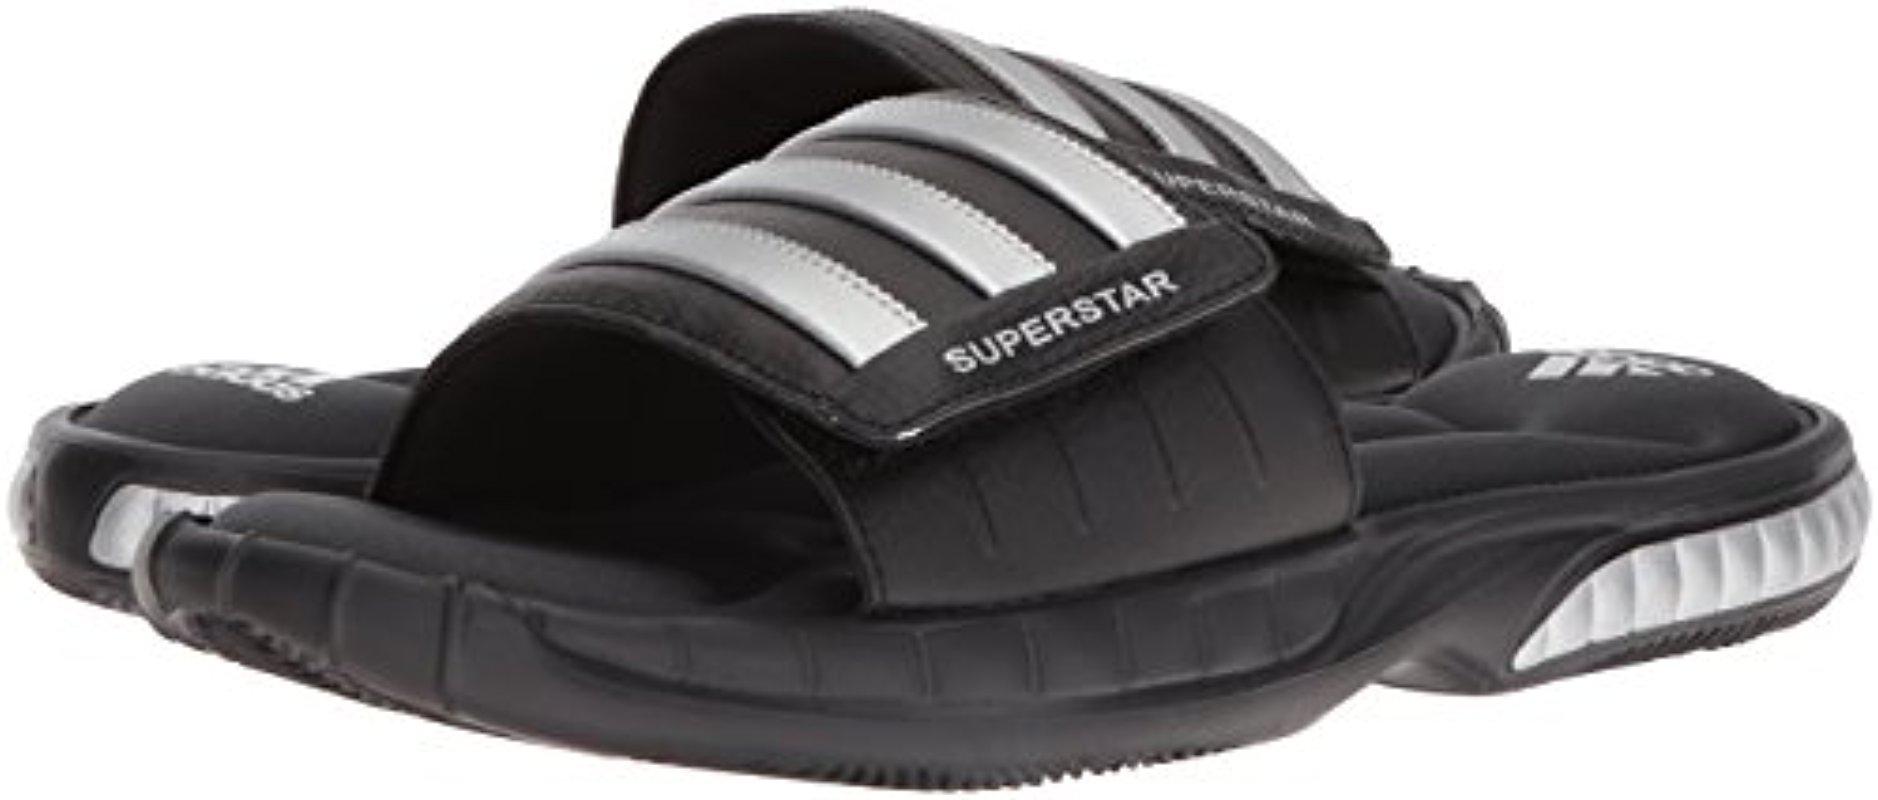 adidas Synthetic Performance Superstar 3g Slide Sandal in Black/Silver  (Black) for Men | Lyst